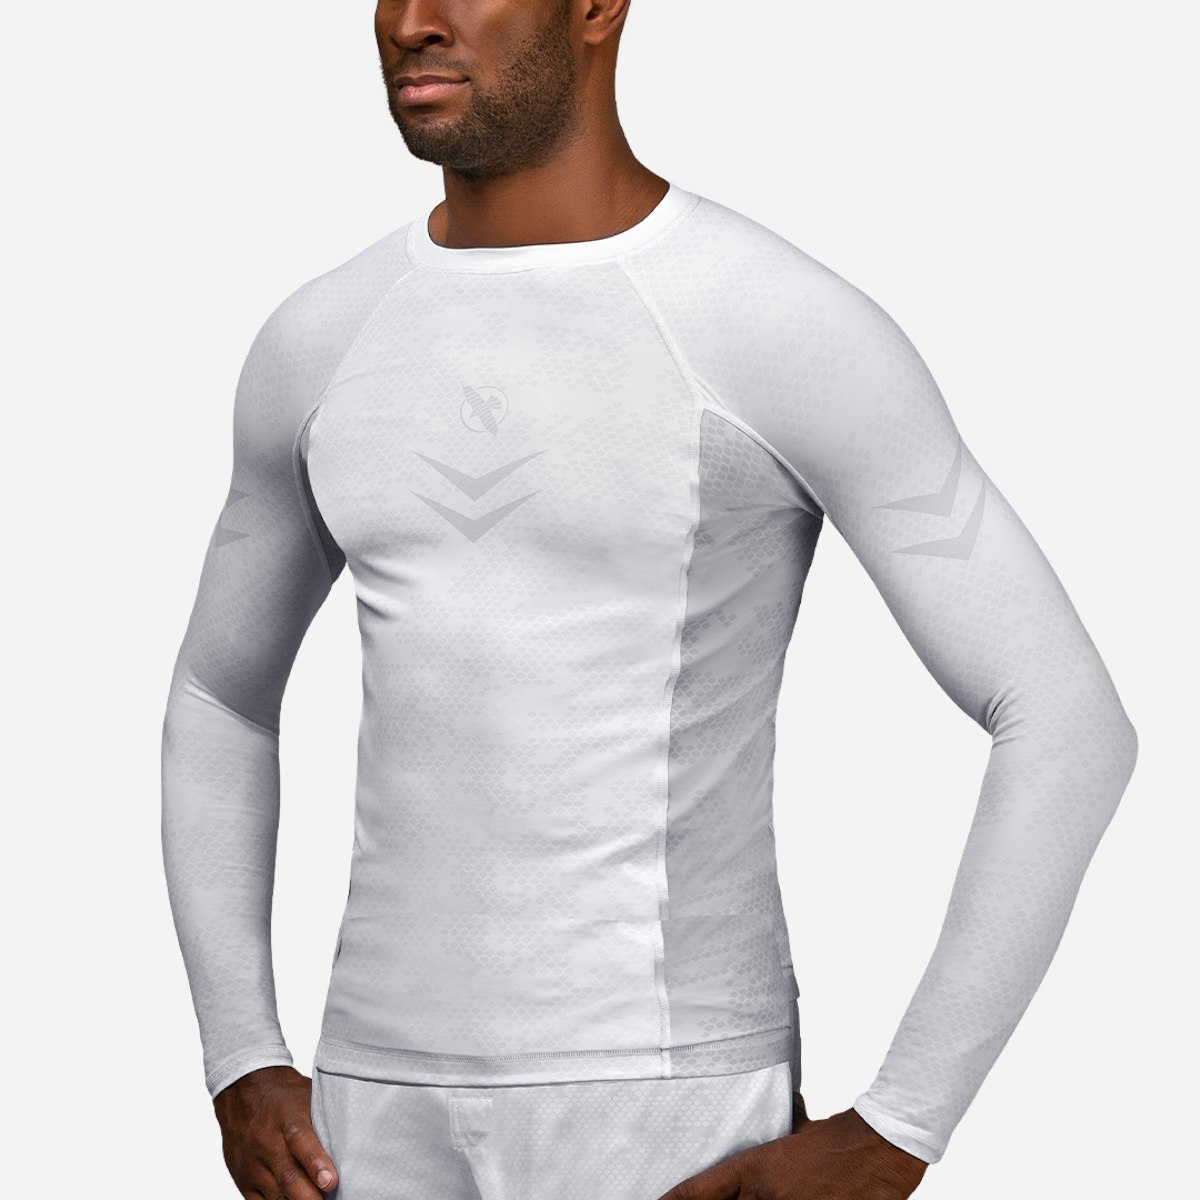 Tritanium eXtend Performance Men's Compression Short Sleeve Shirt